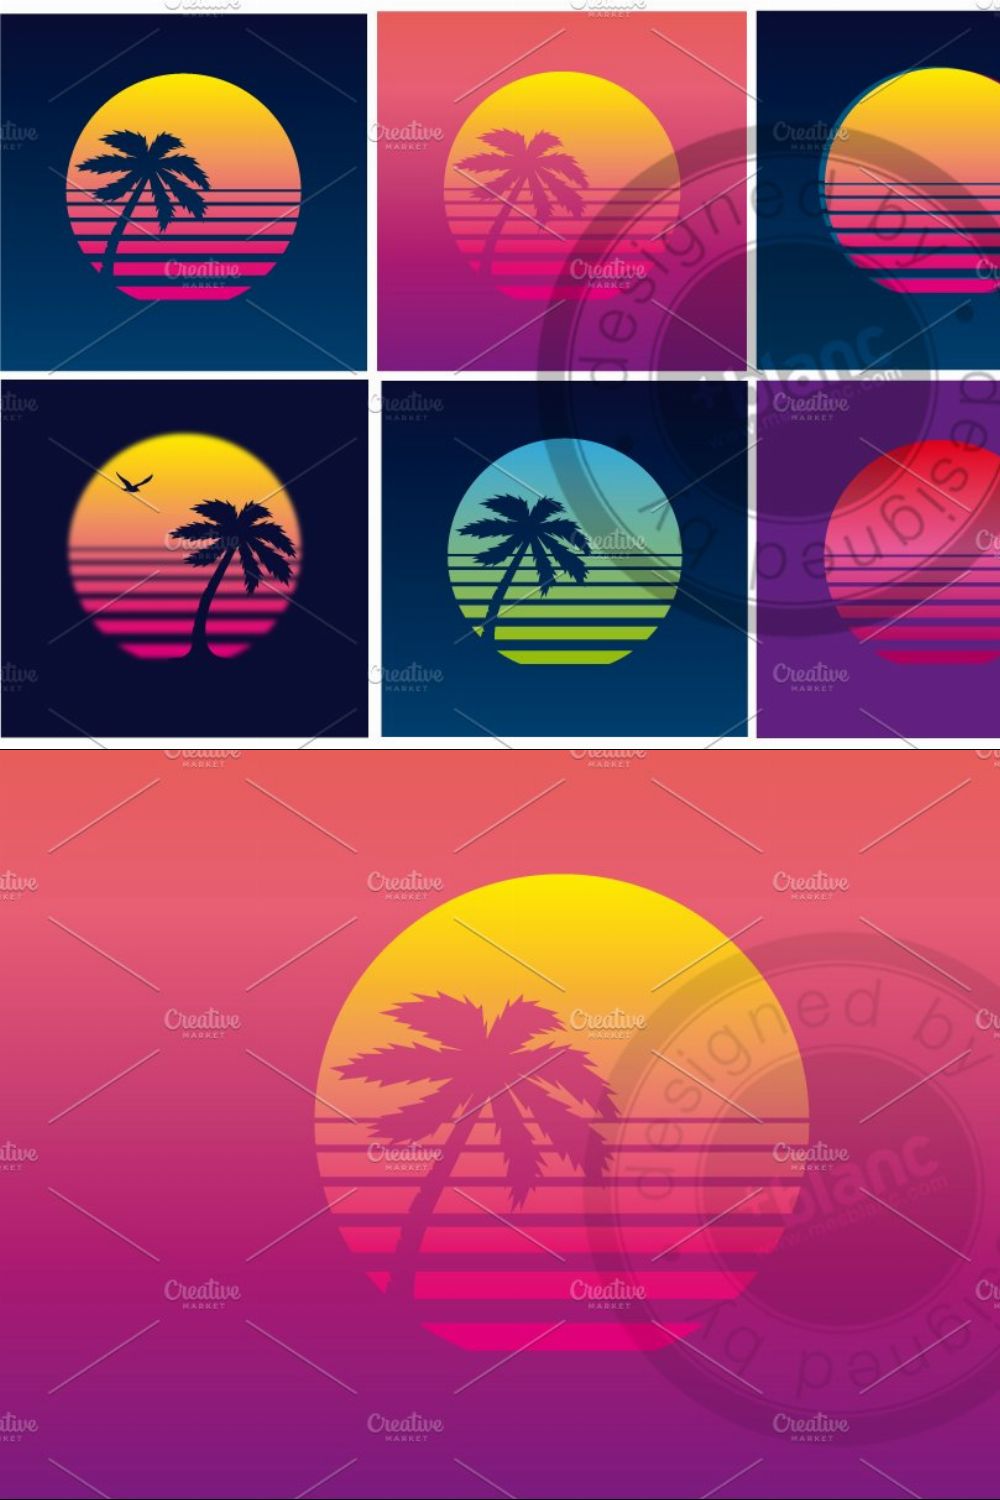 Retro Sunset pinterest preview image.